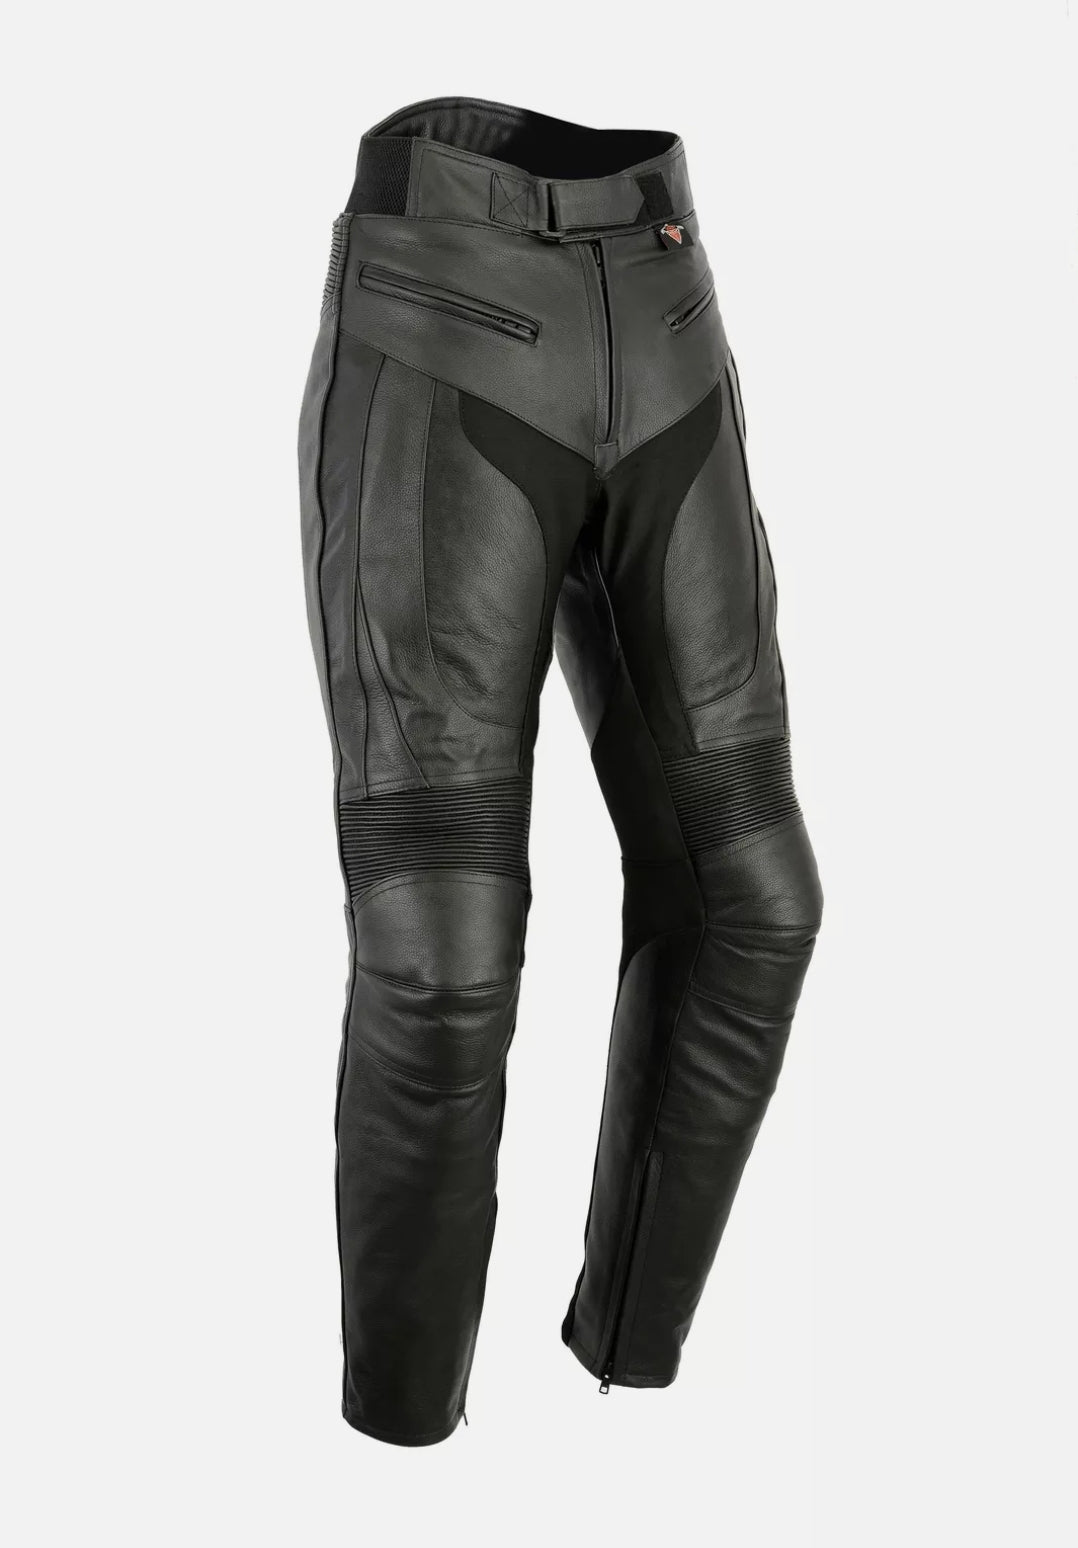 Waterproof Leather Pants, Leather Motorcycle Pants